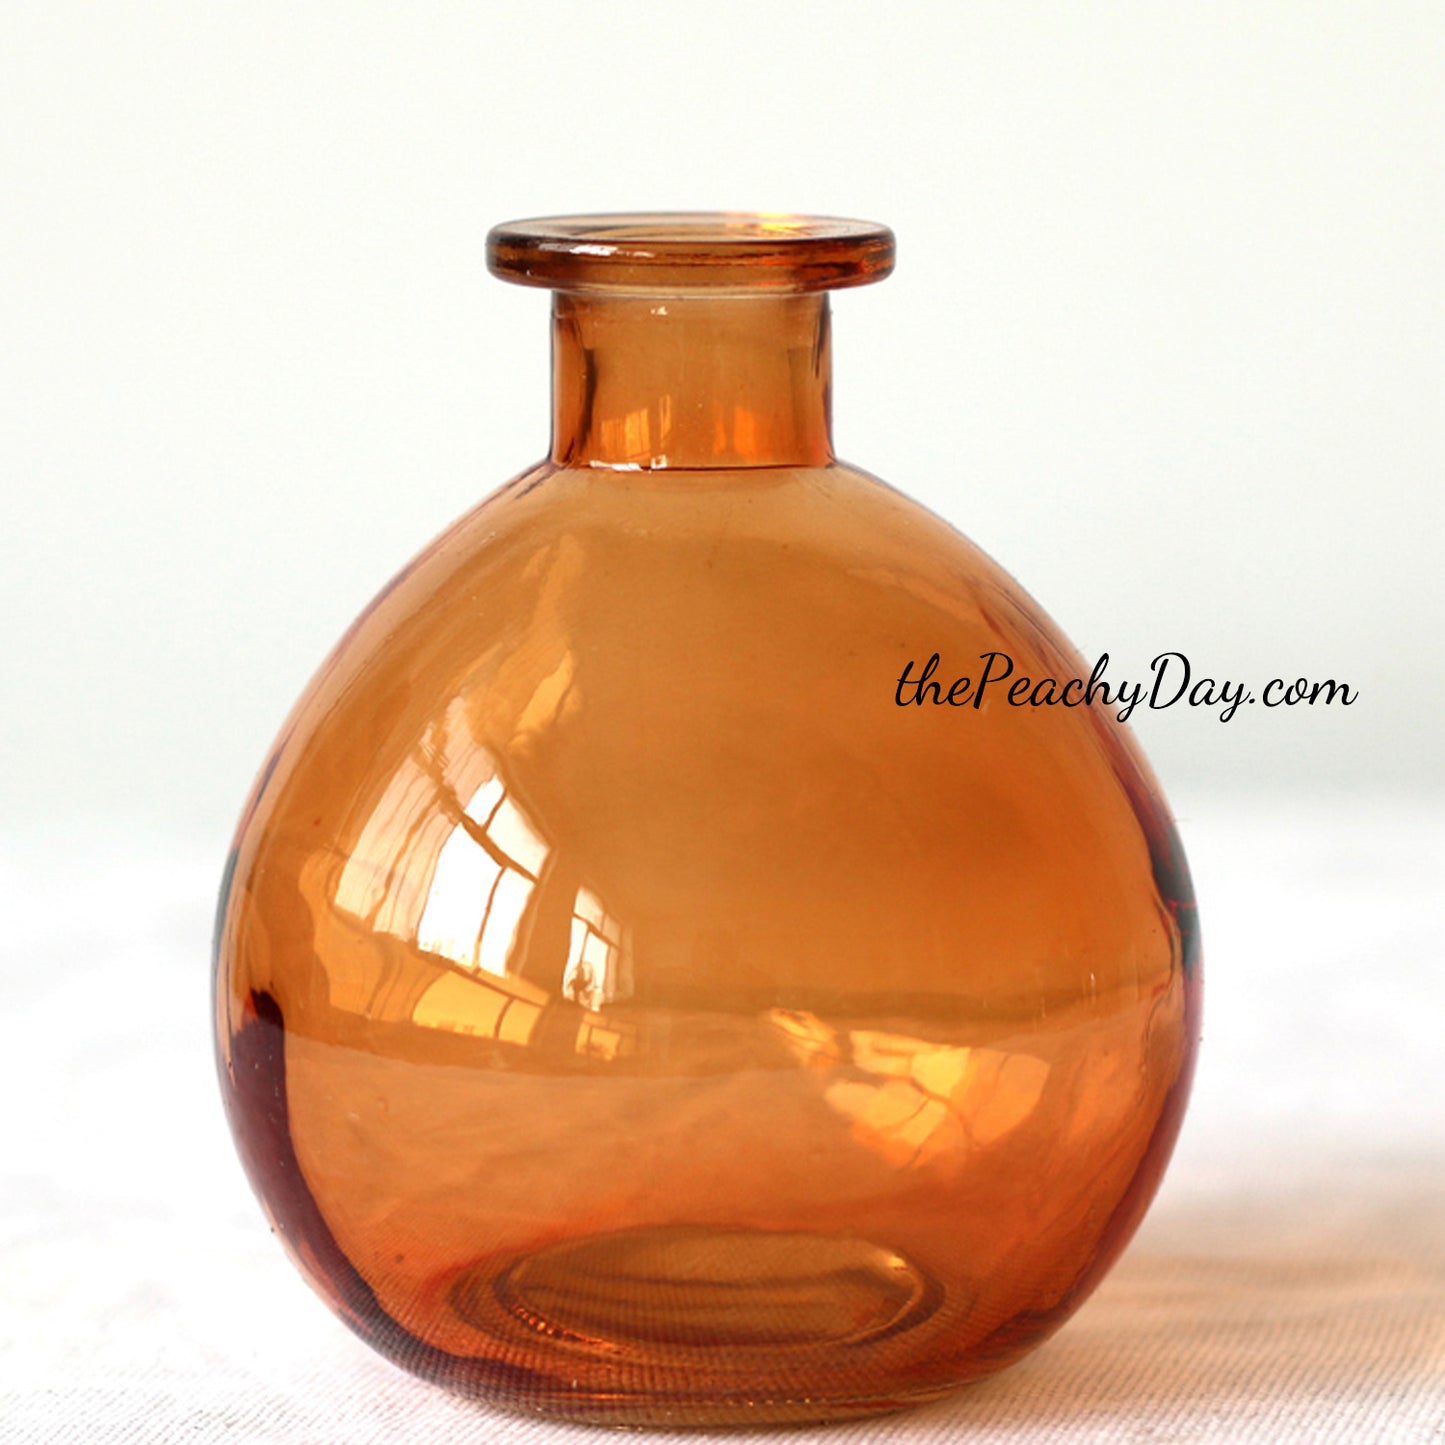 Set of 4 - Orange Glass Bottle Vases